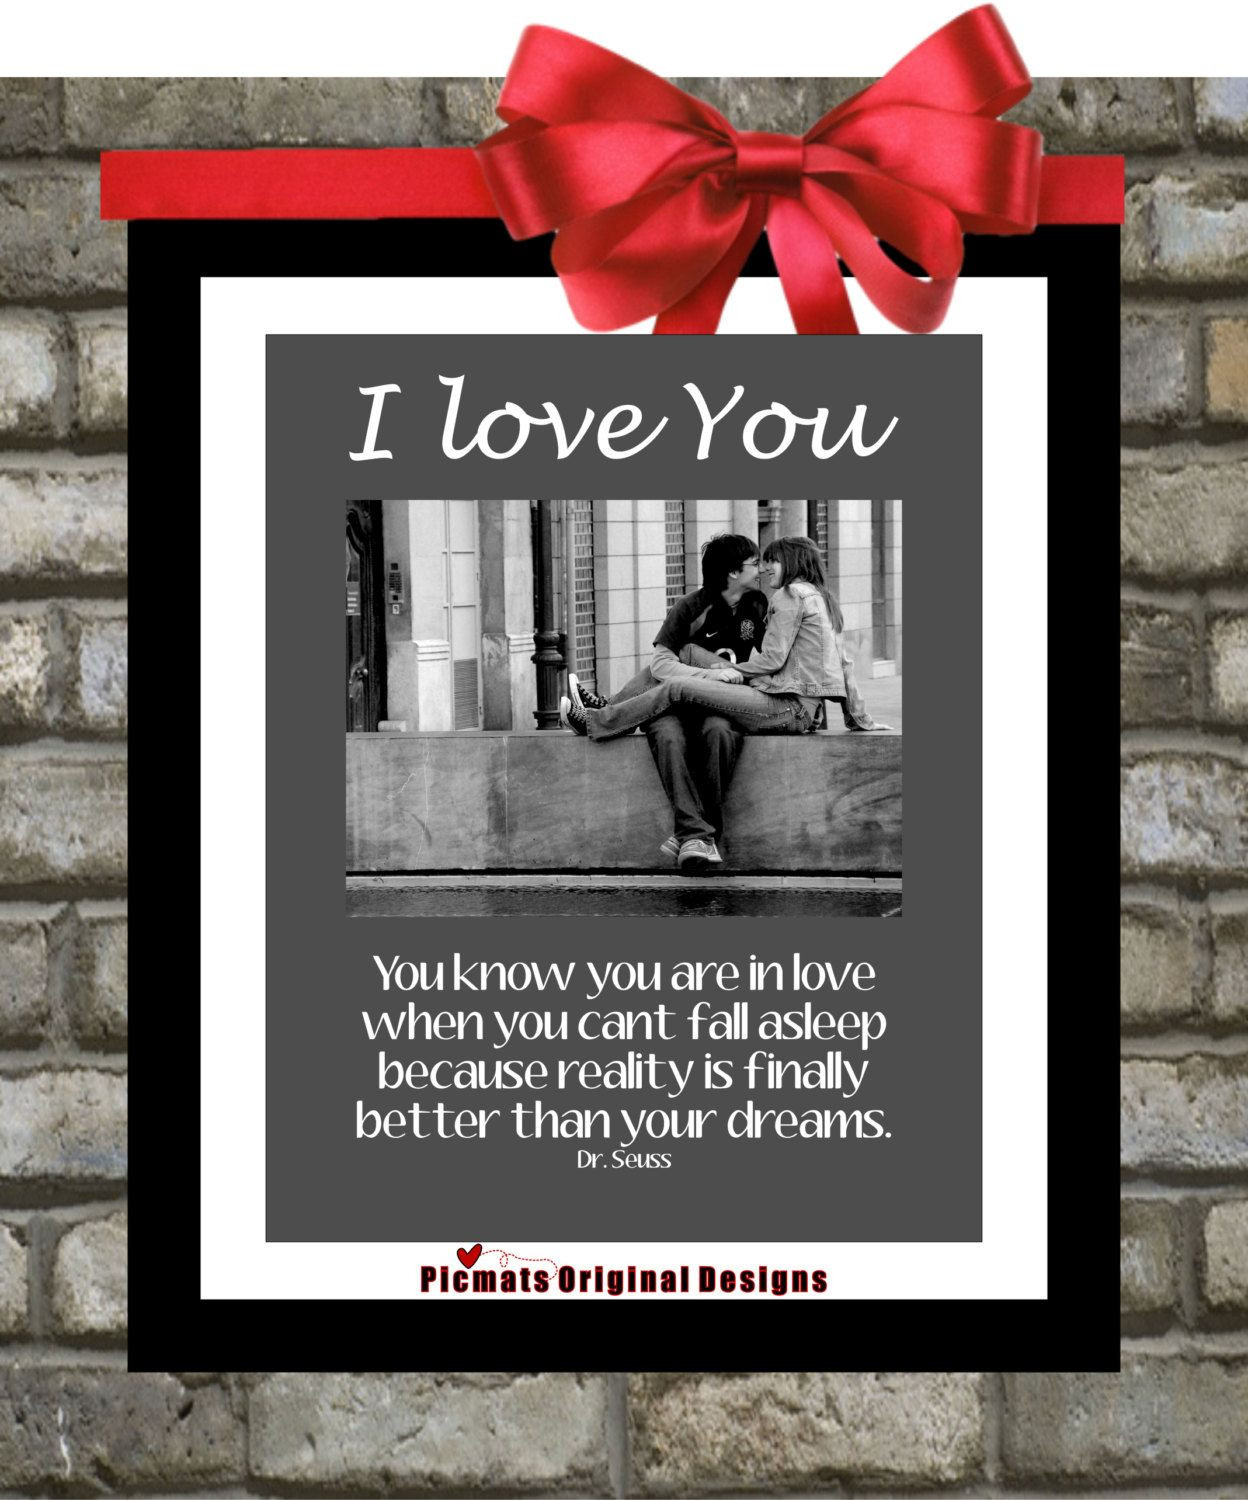 Personalized Gift Ideas For Boyfriend
 Pinterest Picture Frames For Boyfriend Easy Craft Ideas